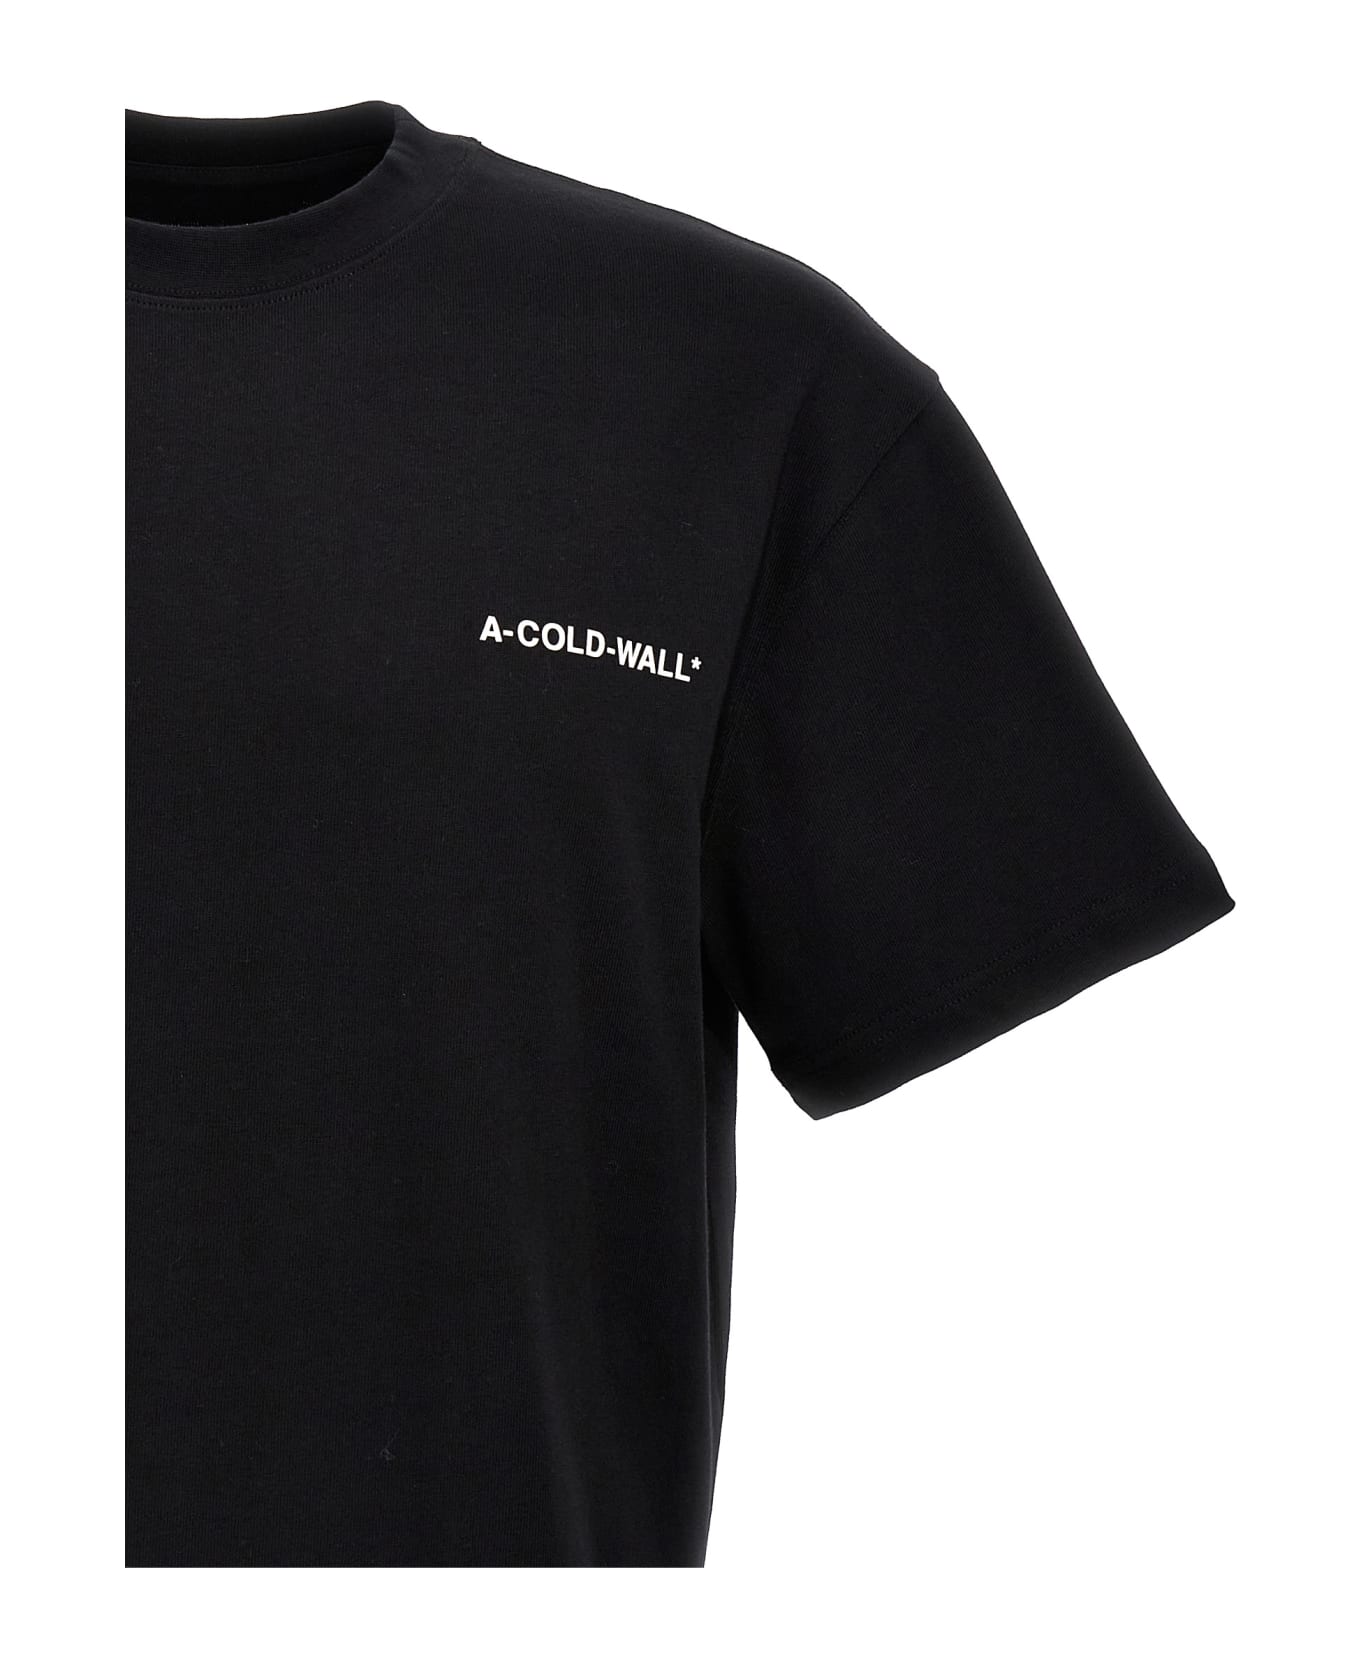 A-COLD-WALL 'essential Small Logo' T-shirt T-Shirt - BLACK